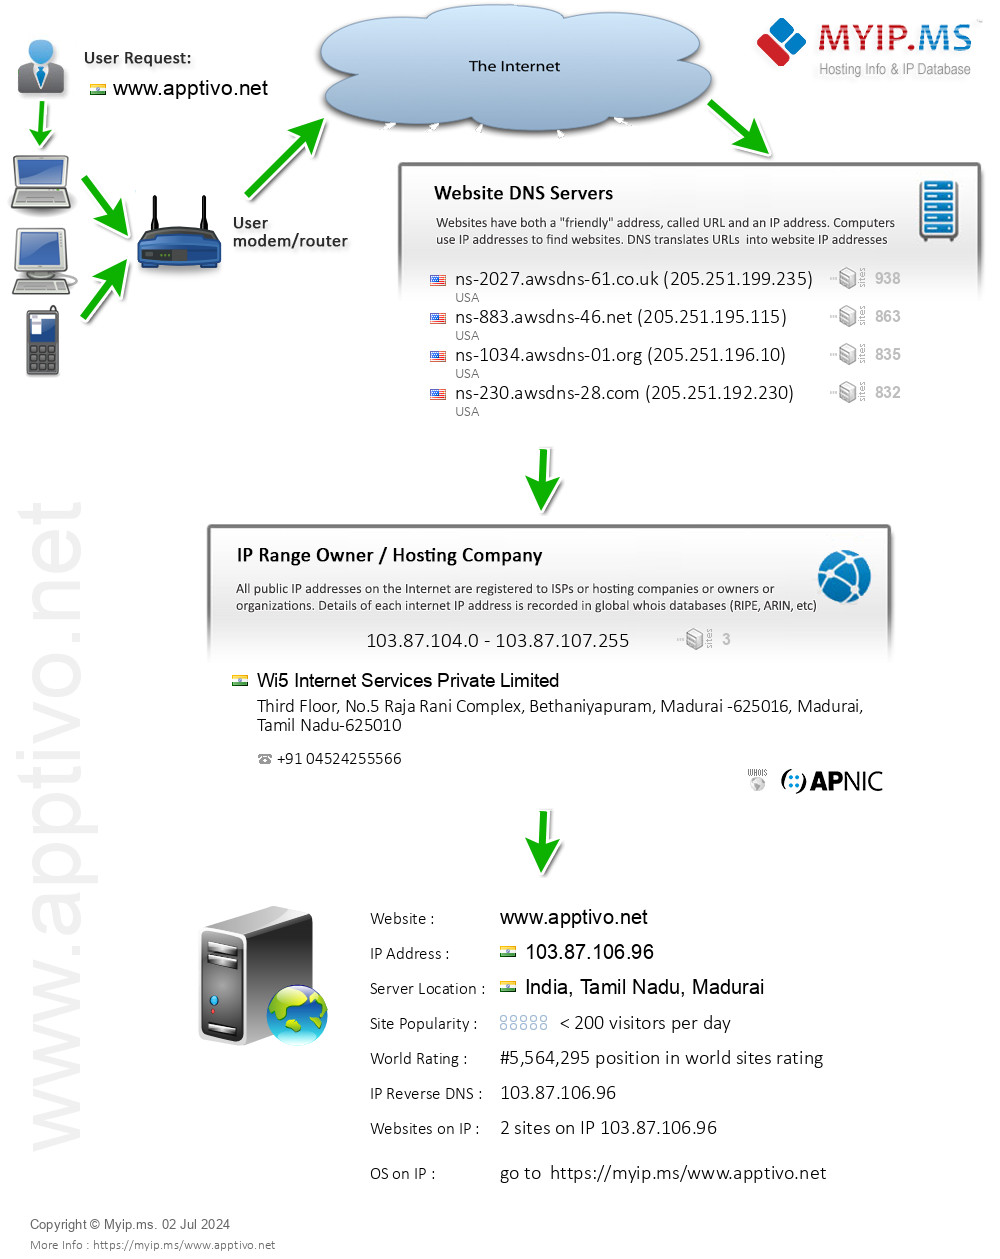 Apptivo.net - Website Hosting Visual IP Diagram